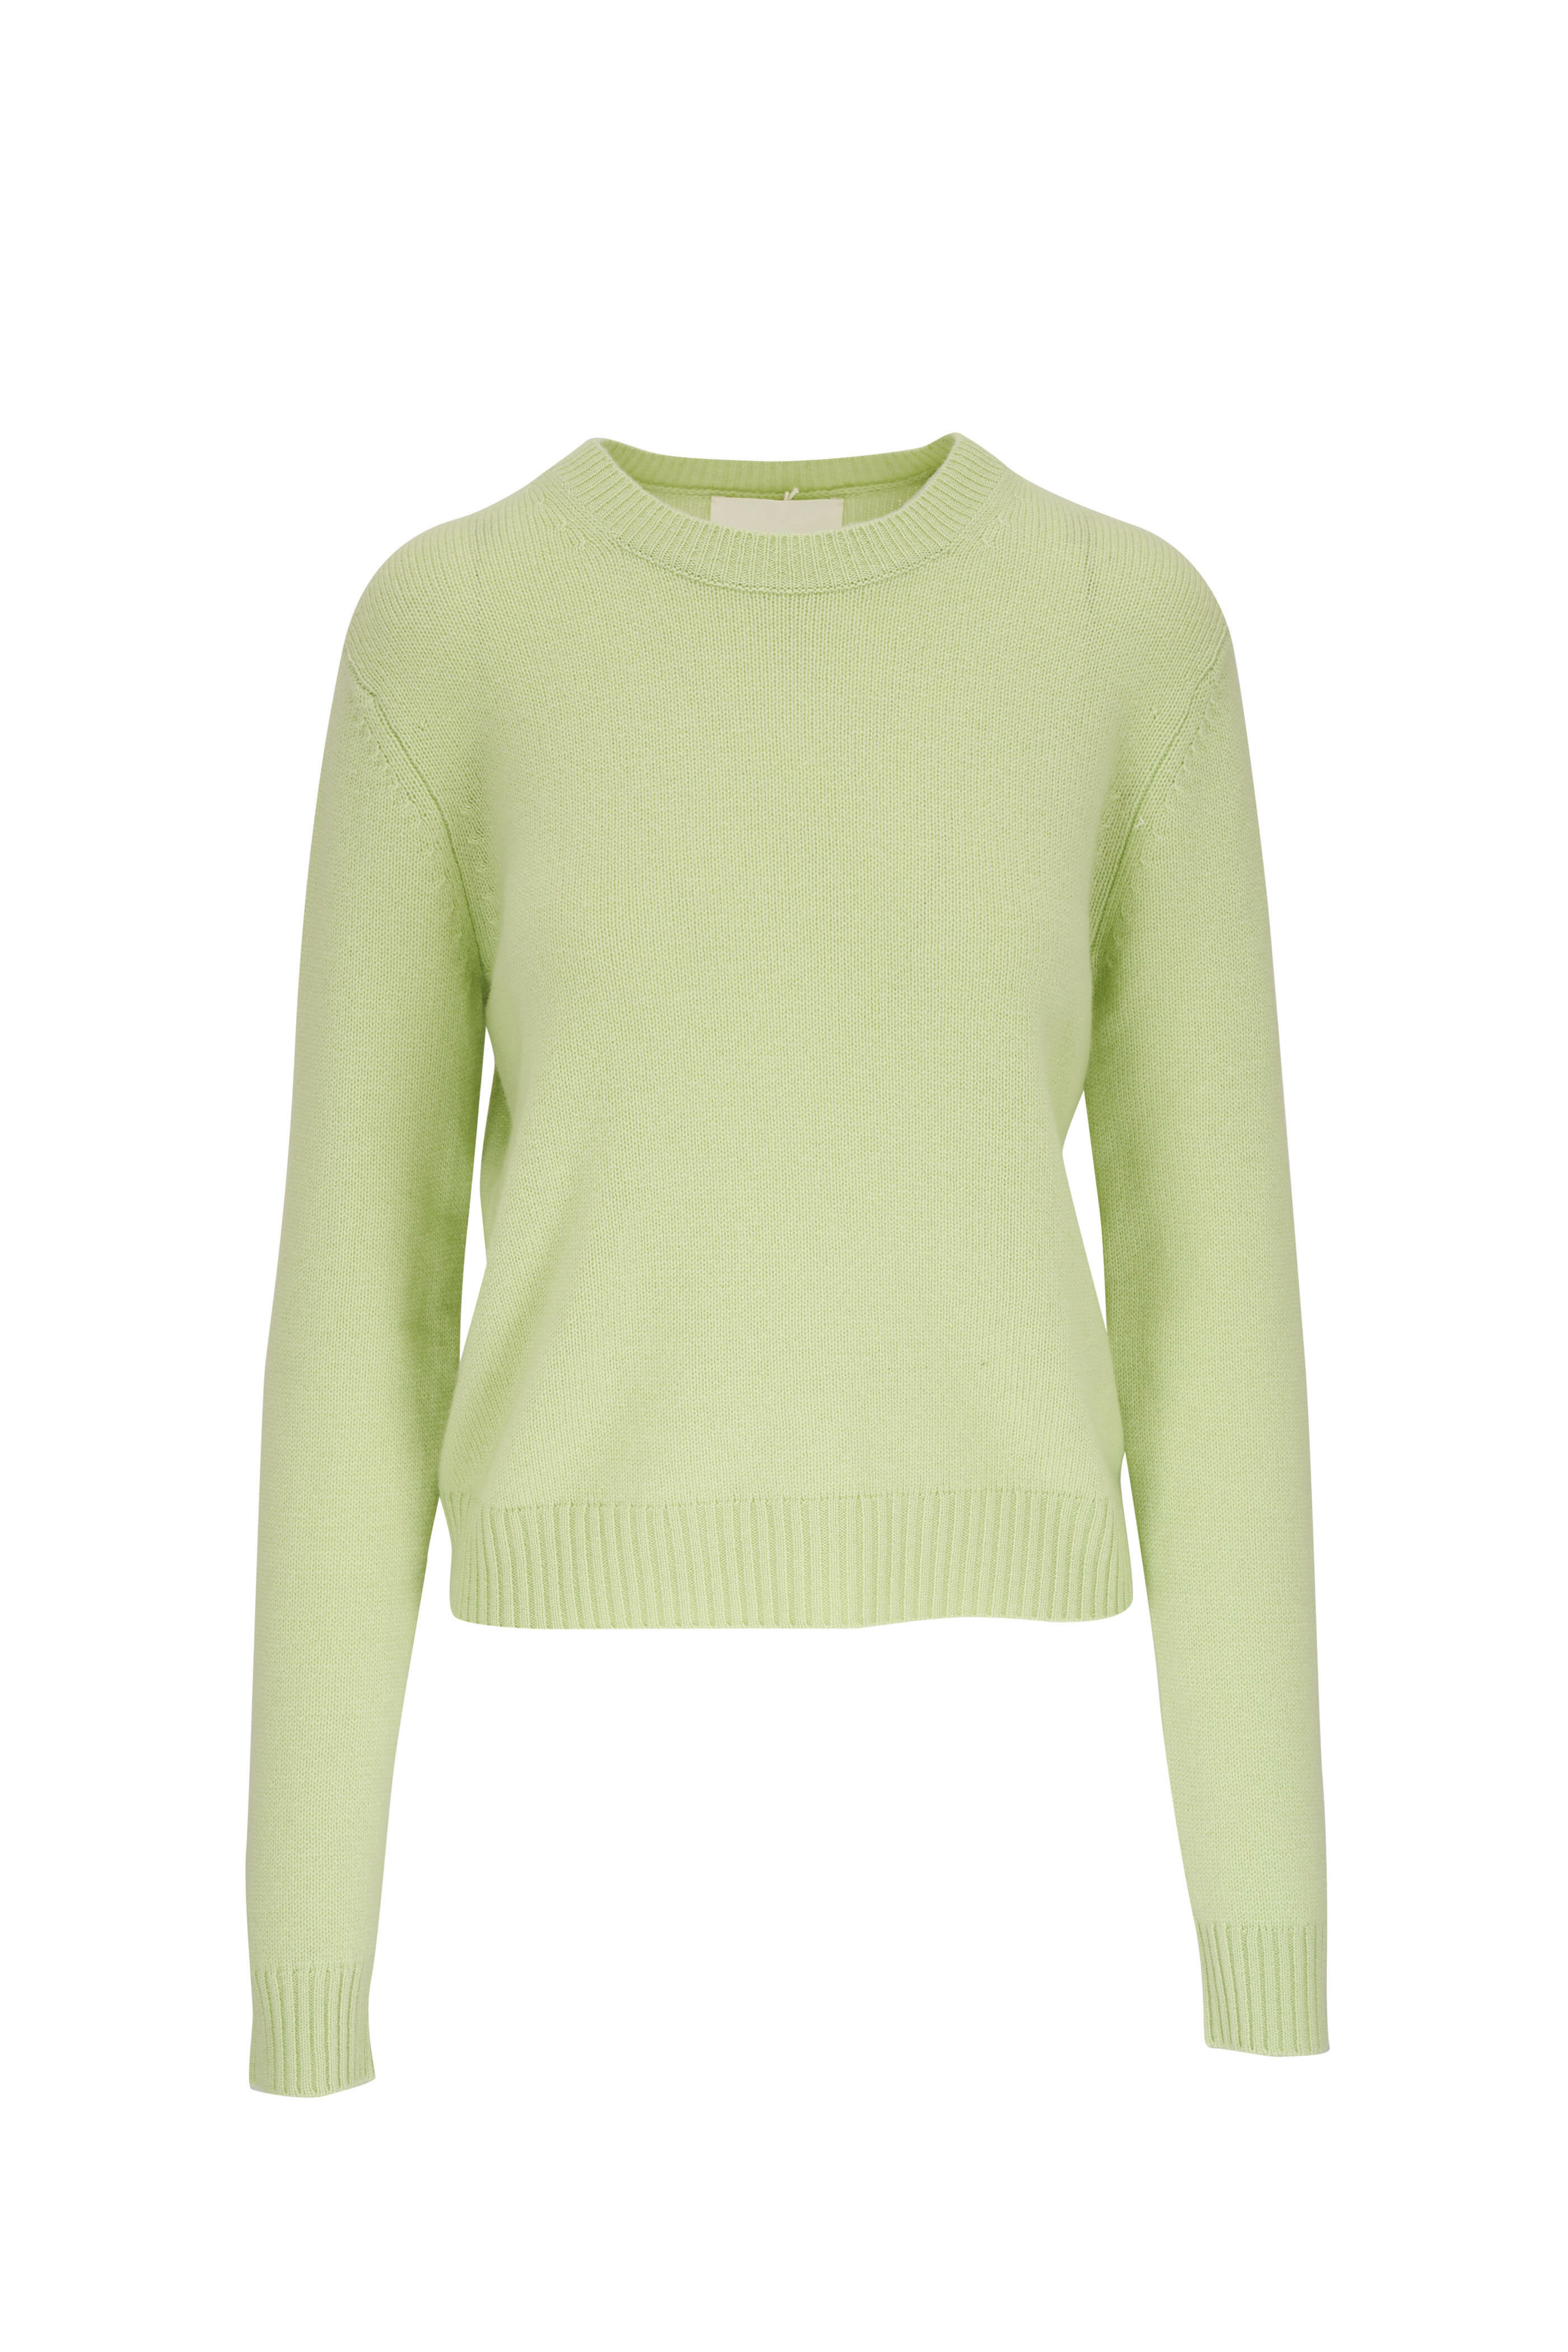 Lisa Yang - Mable Mint Crewneck Cashmere Sweater